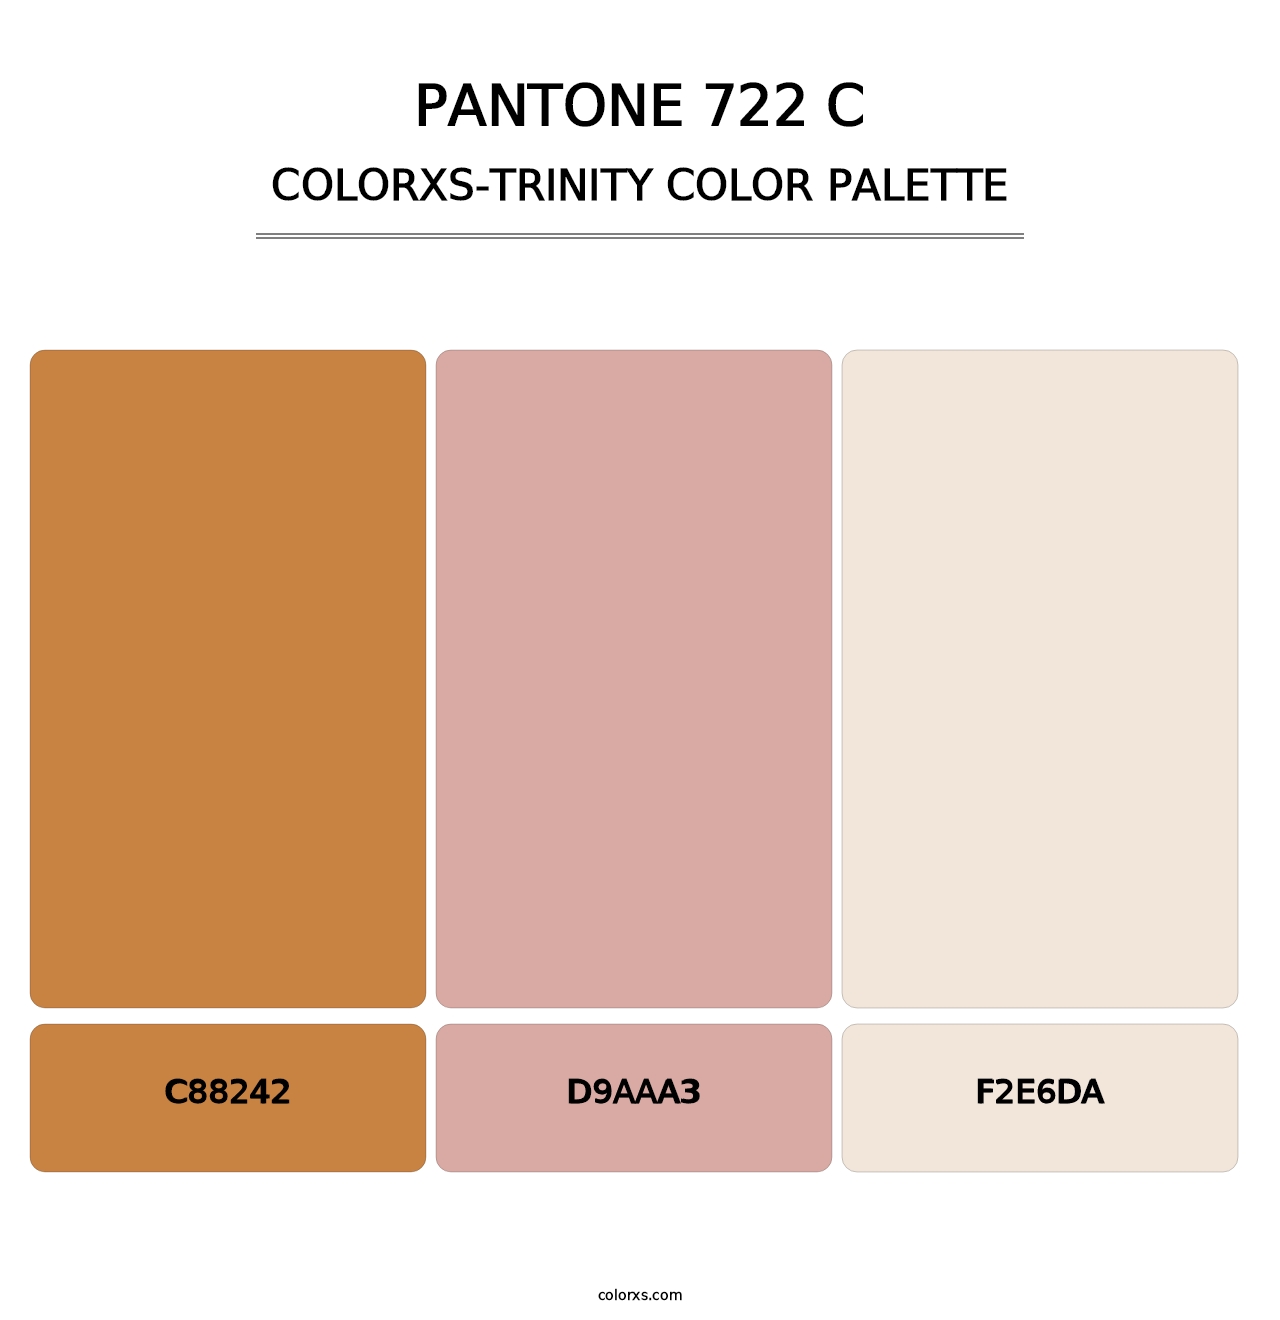 PANTONE 722 C - Colorxs Trinity Palette